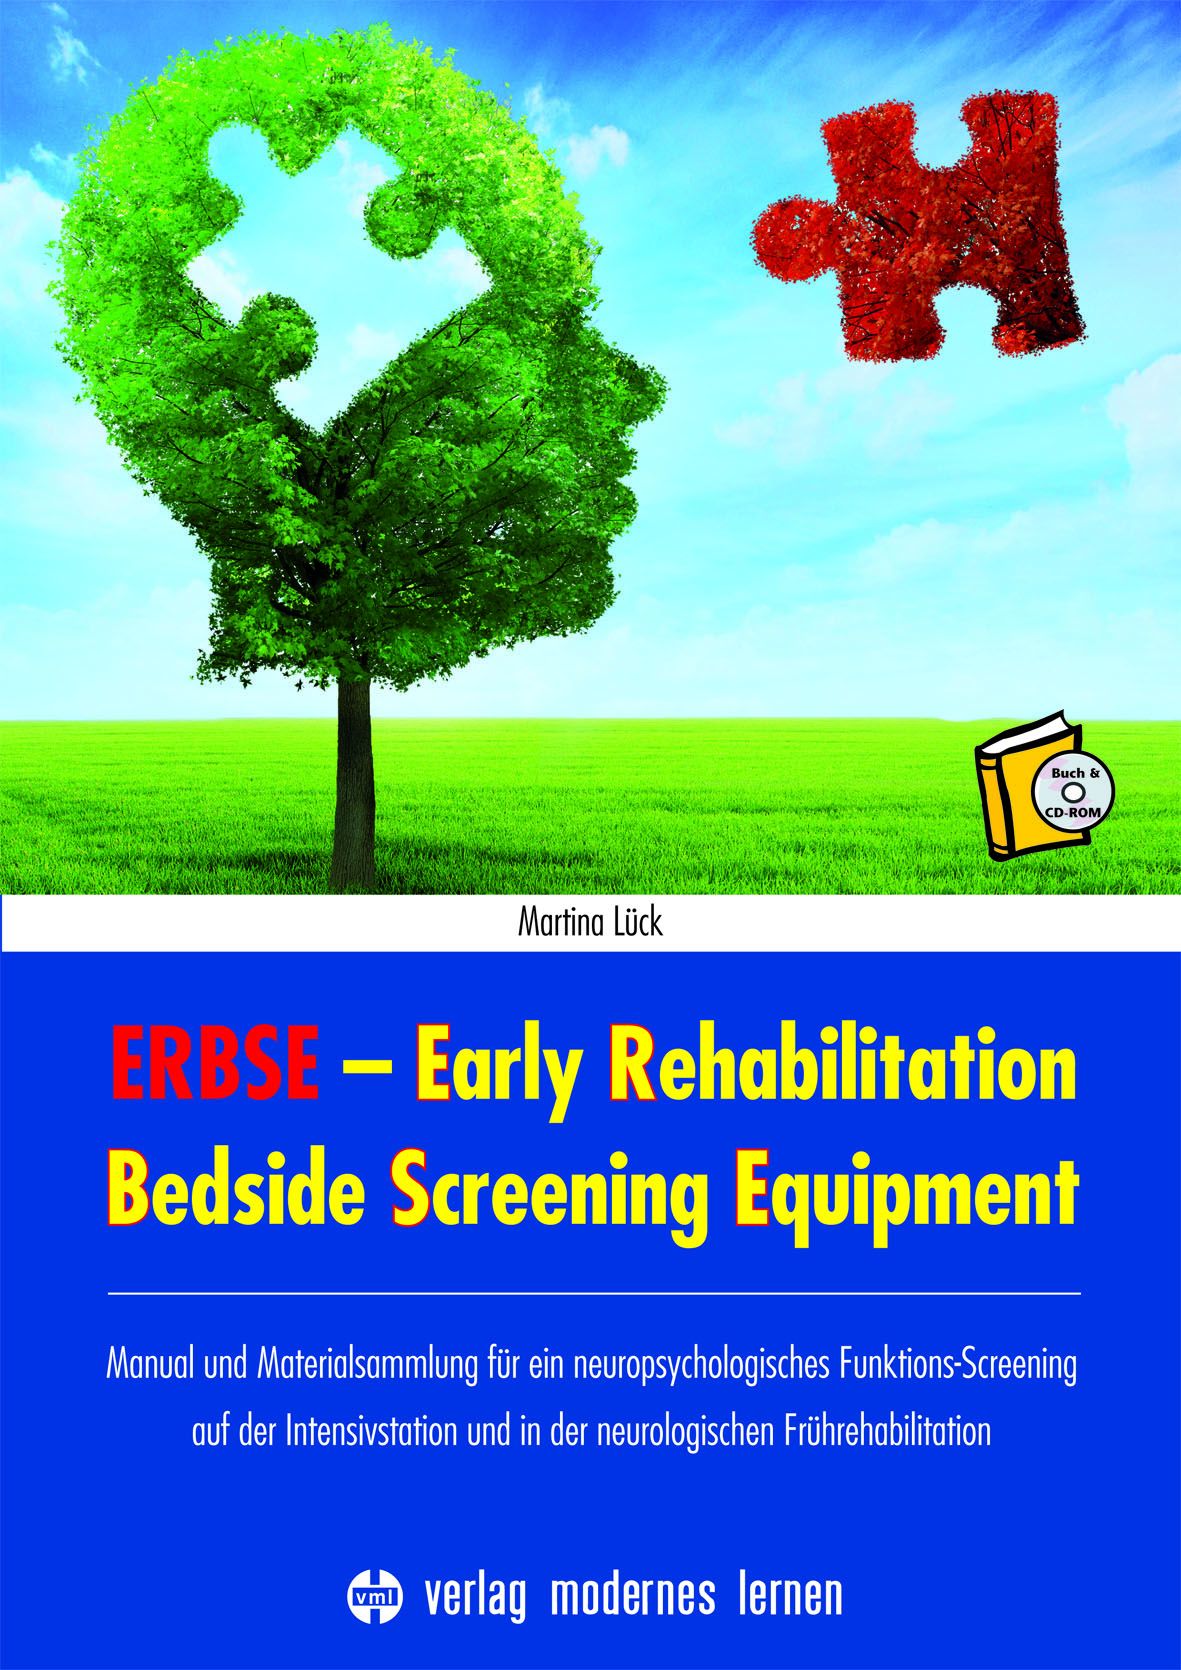 ERBSE - Early Rehabilitation Bedside Screening Equipment